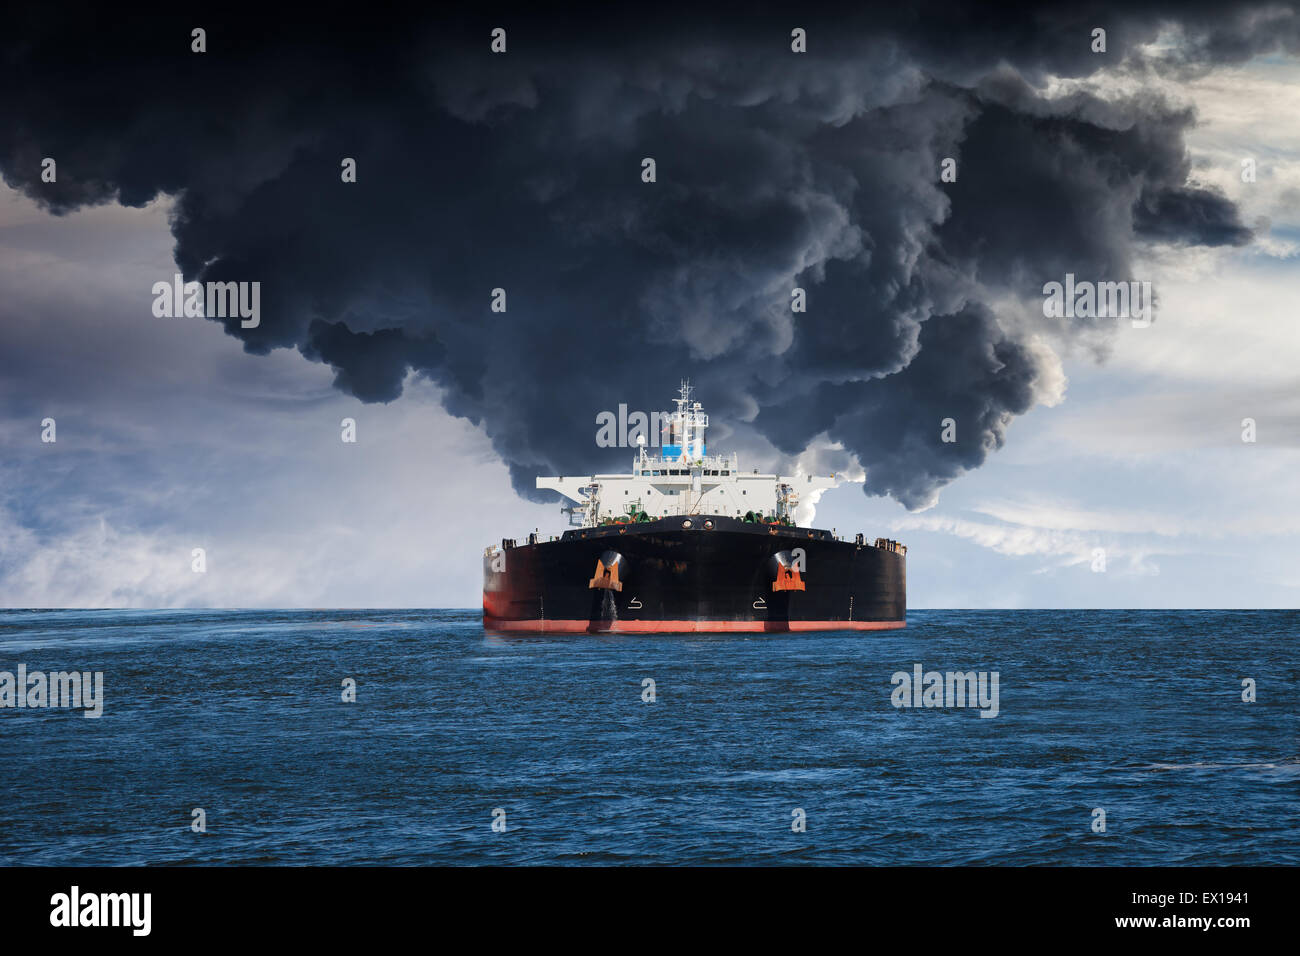 Burning Tanker ship on the sea. Stock Photo